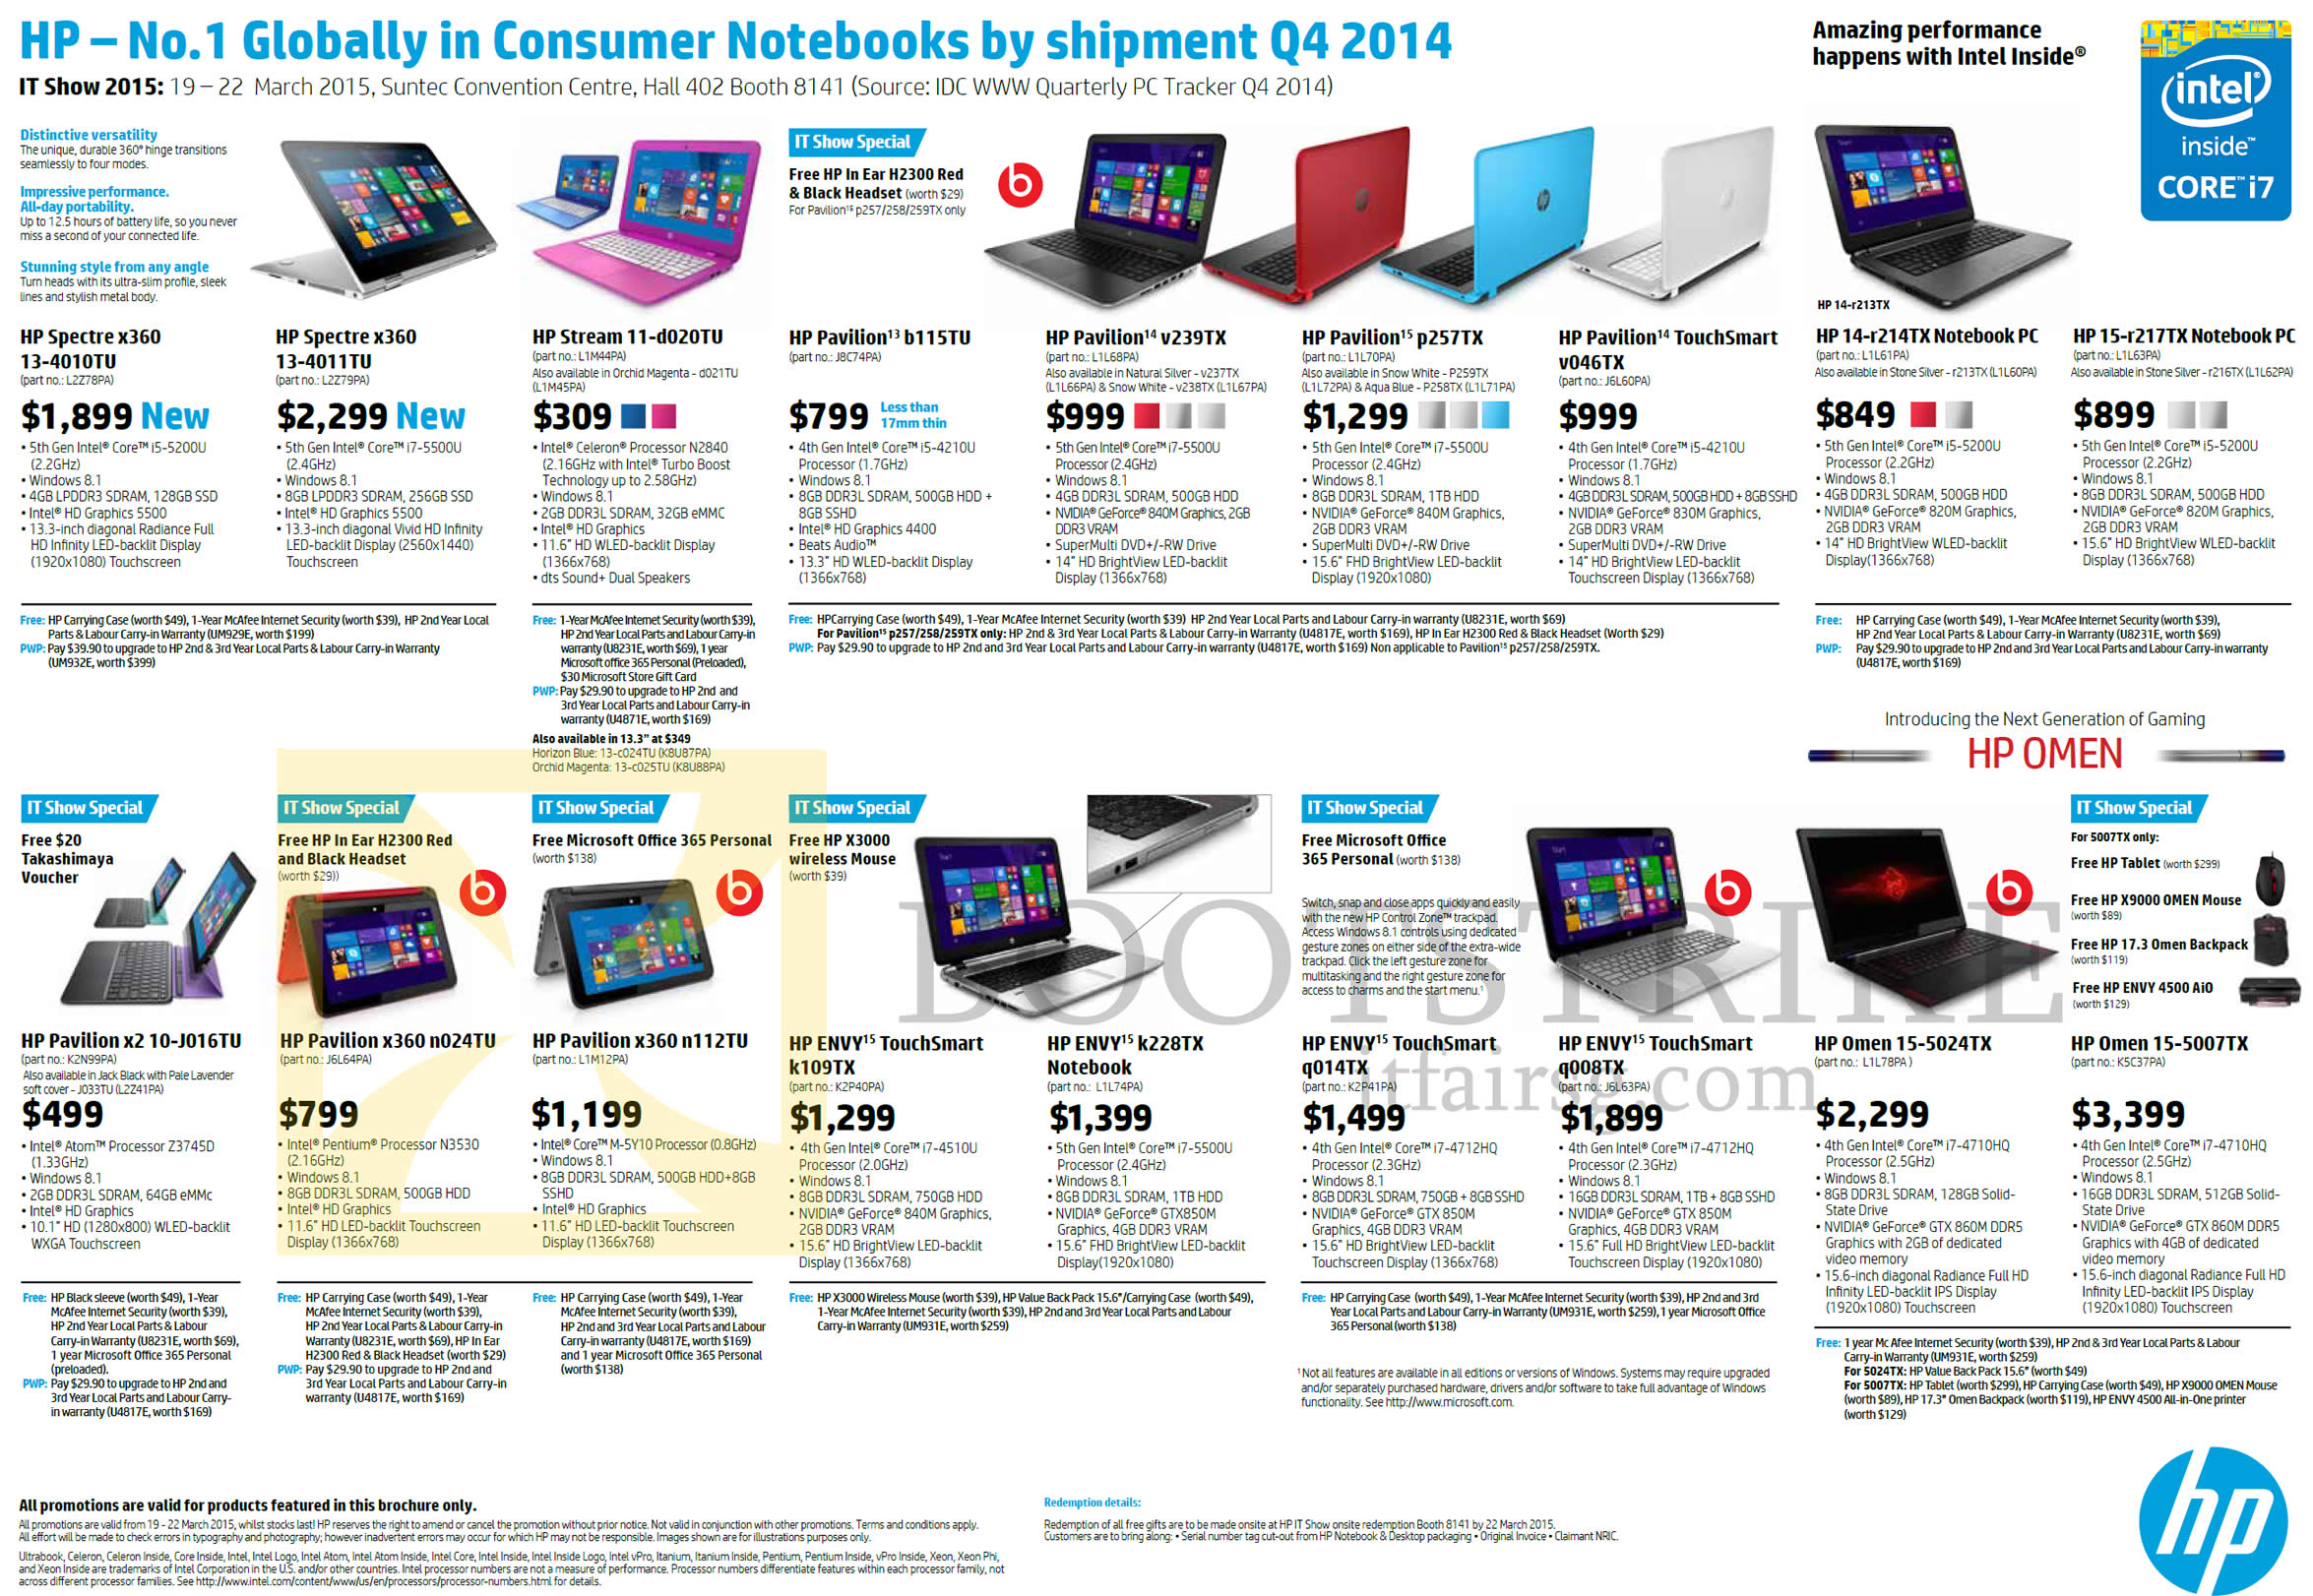 IT SHOW 2015 price list image brochure of HP Notebooks Spectre X360 13-4010TU, 4011, Stream 11-d020TU, Pavilion B115TU V239TX P257TX, TouchSmart V046TX 14-r214TX15-r217TX, Envy K109TX Q014TX